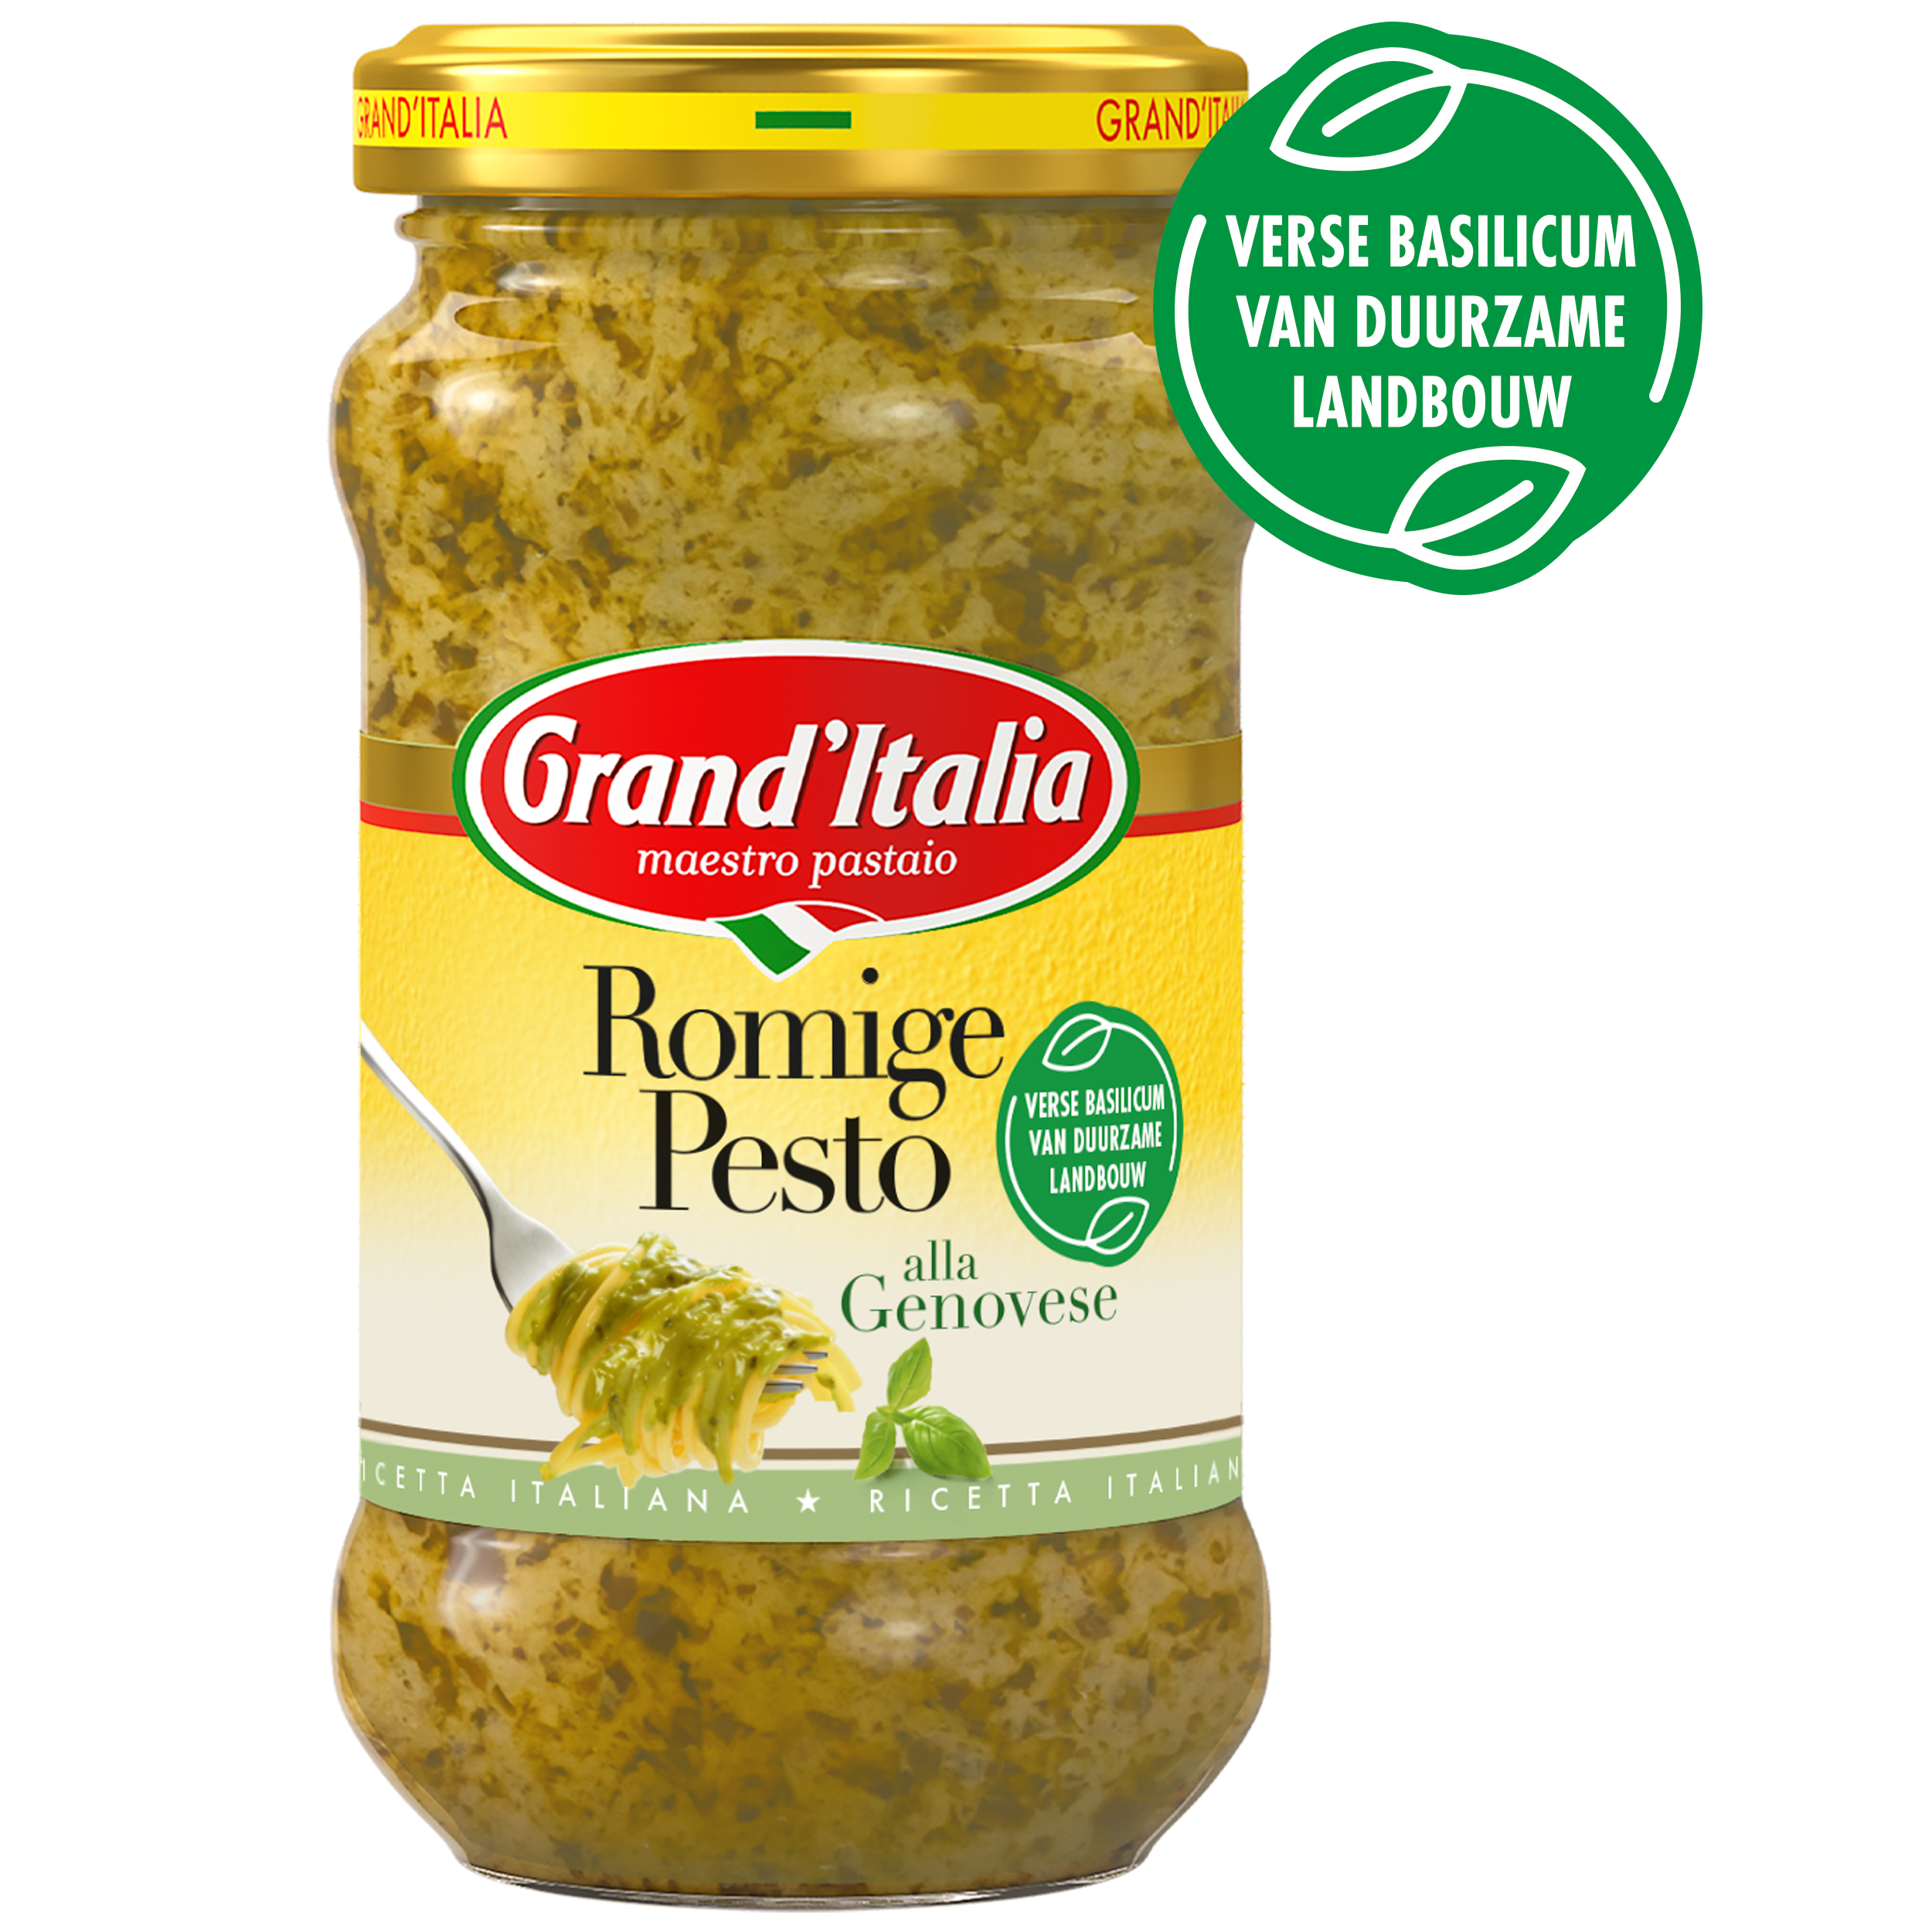 Romige Pesto alla Genovese 185g Grand'Italia - claim